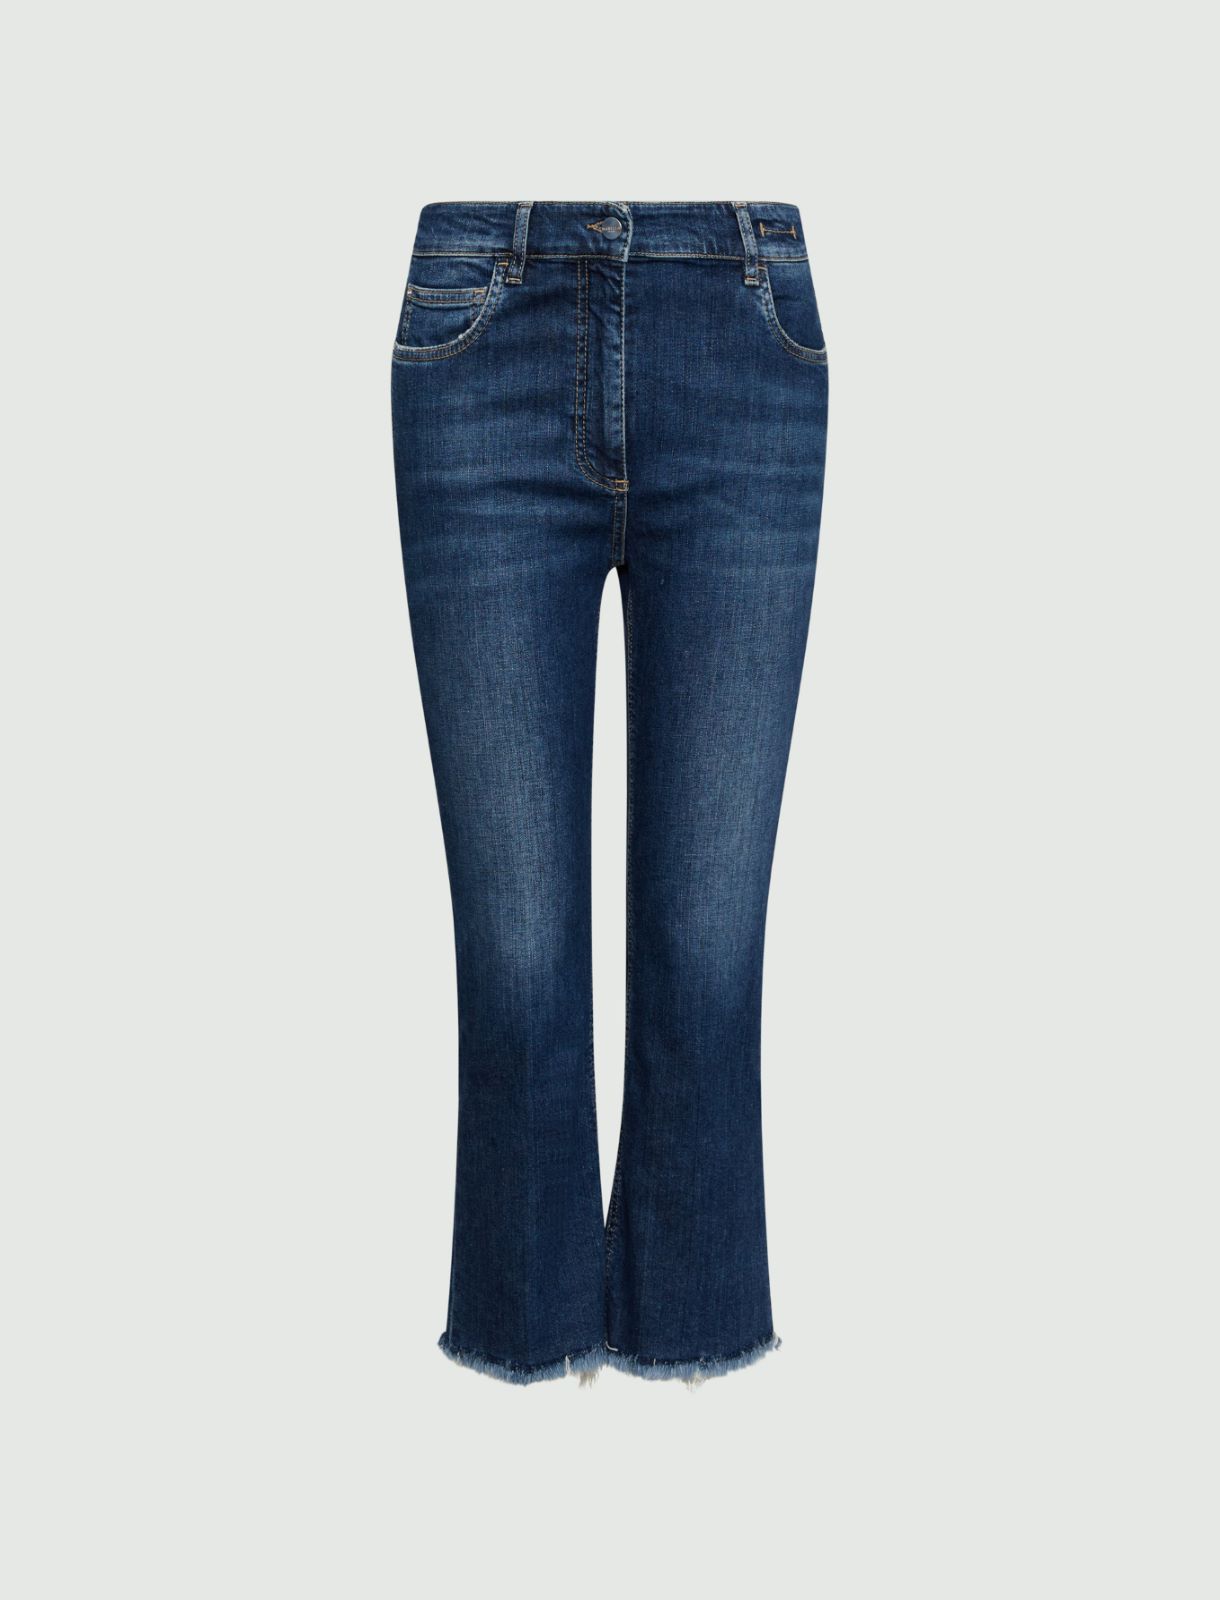 Flare-Fit Jeans - Jeansblau - Marella - 6